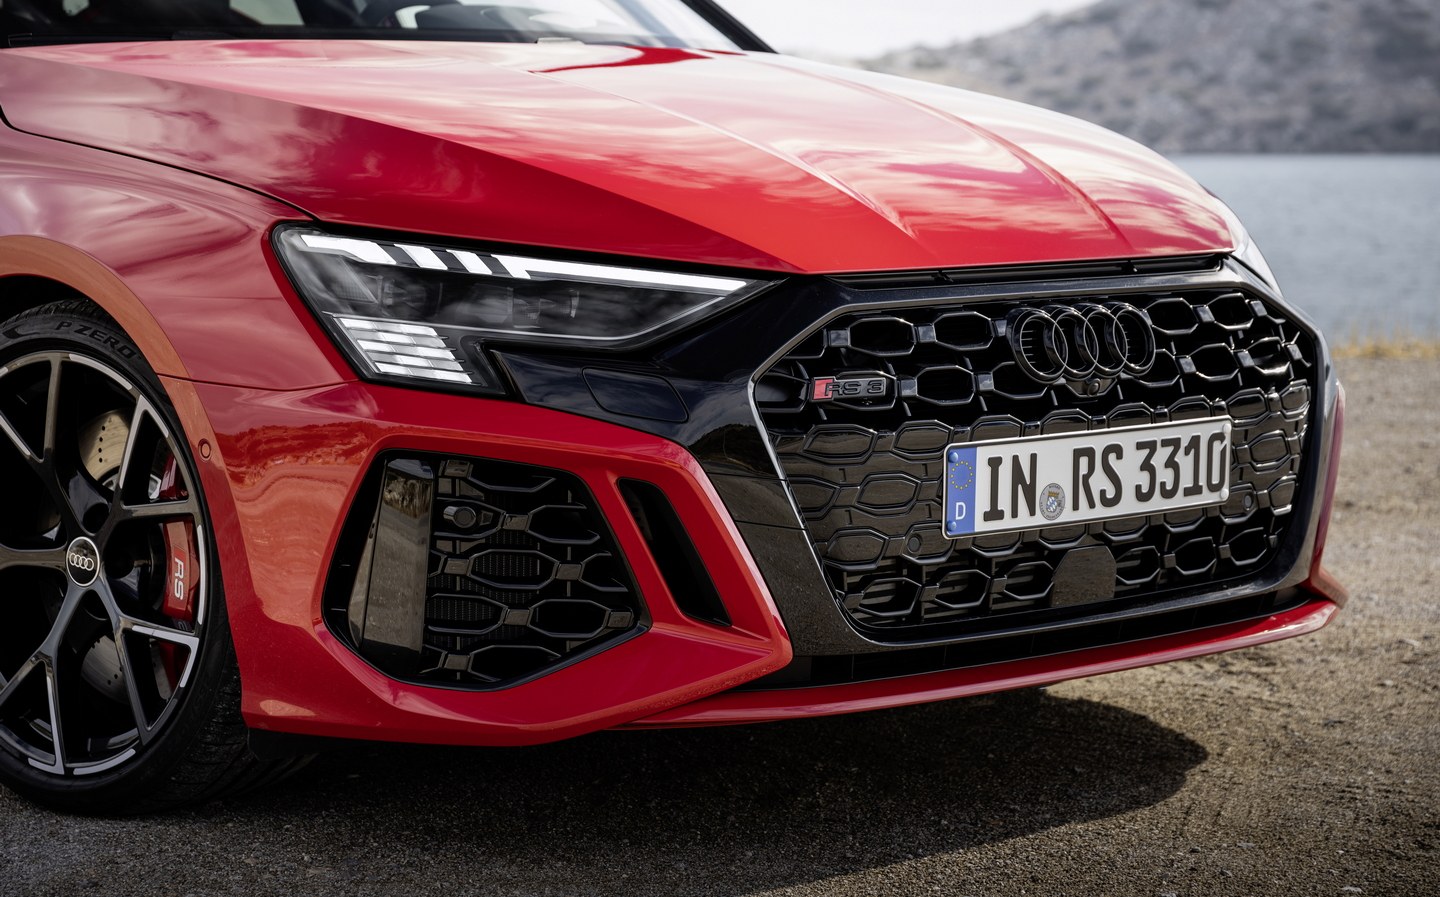 The all-new Audi RS 3: Legendary performance revolutionized - Audi Newsroom